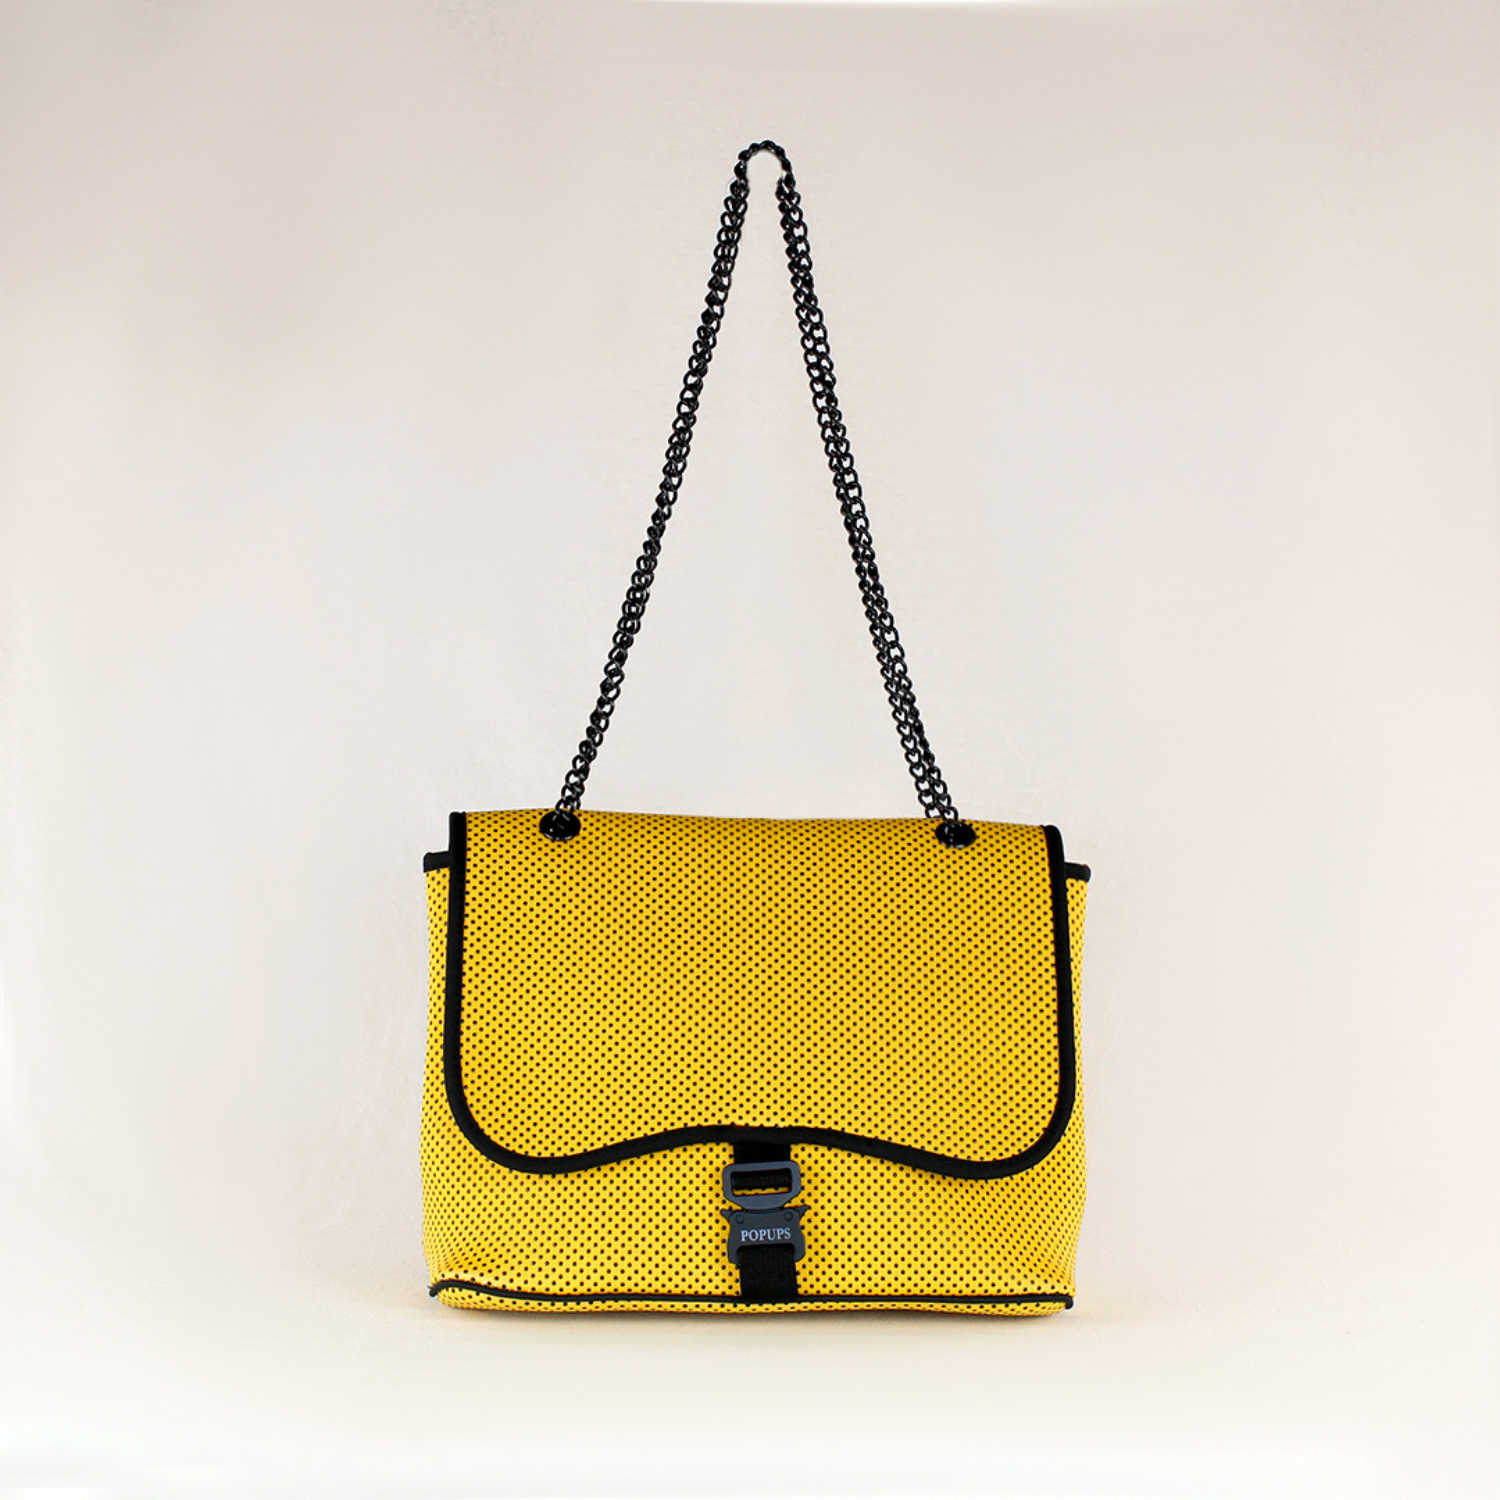 Yellow Leather Crossbody Camera Bag